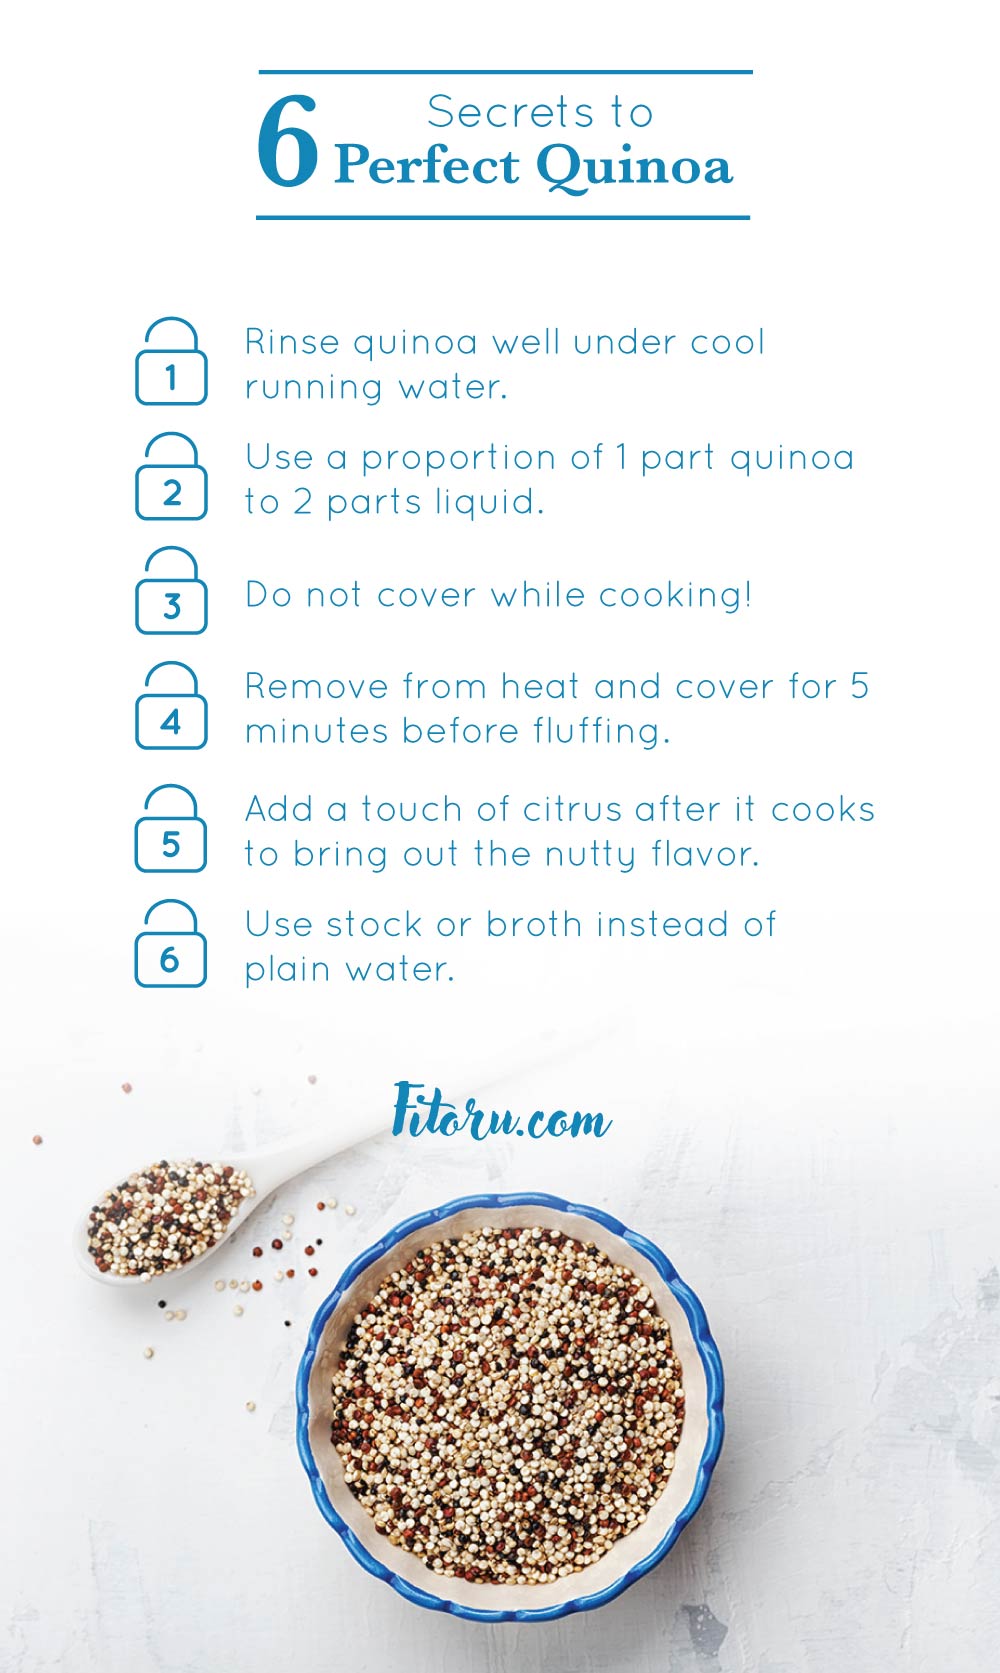 If you love quinoa, try these 17 unique quinoa recipes. 